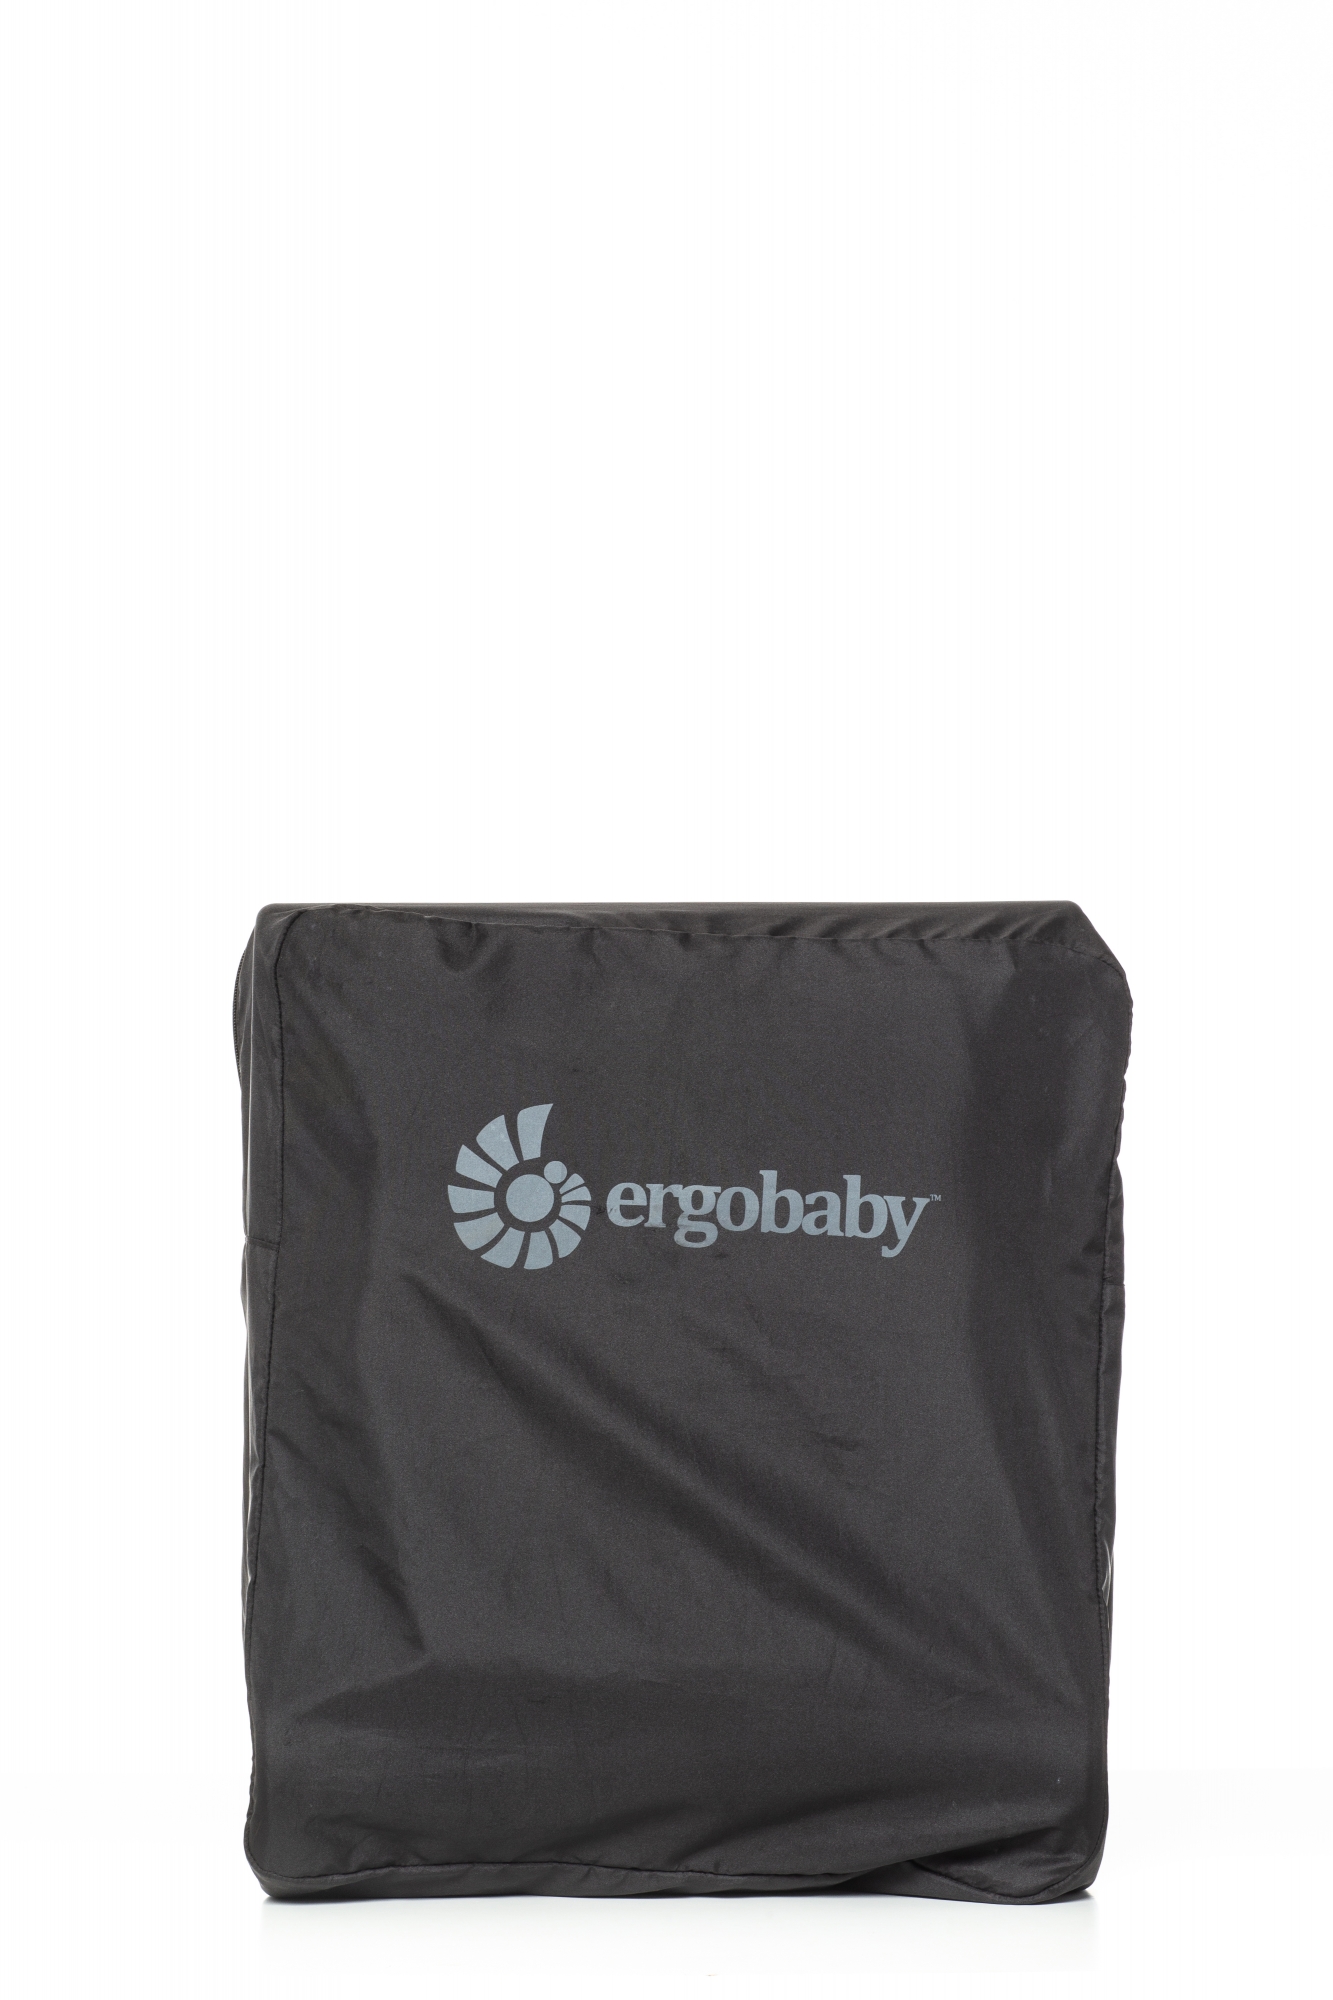 Ergobaby Metro+ Compact Stroller Carry Bag in Black